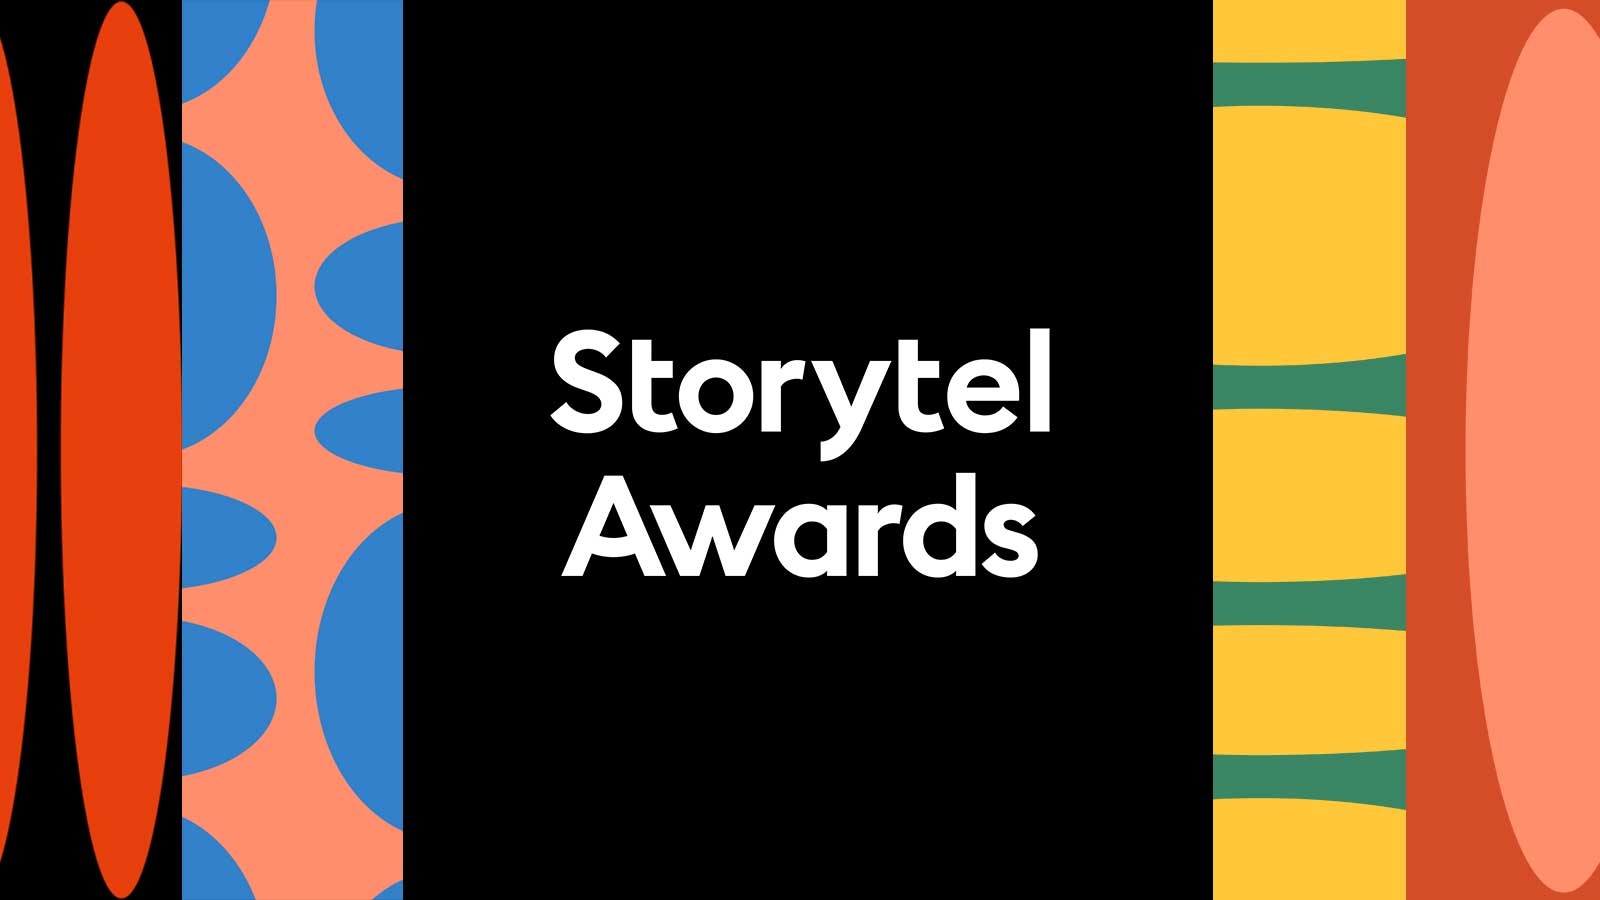 Storytel Awards Hero banner 1600x900